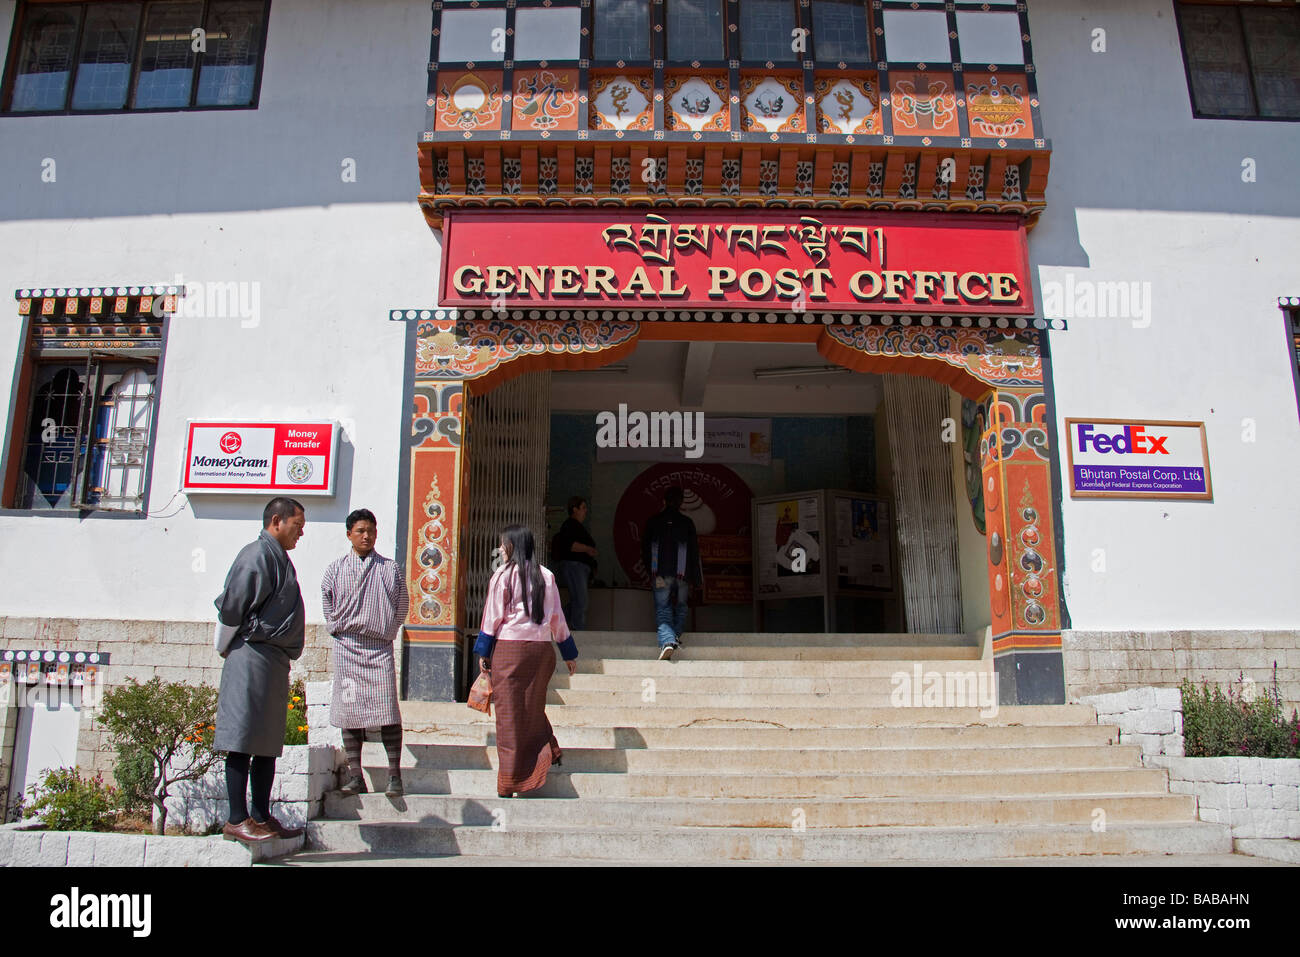 General post office and bank in Thimphu Bhutan Asia 91000 Bhutan-Thimphu Stock Photo